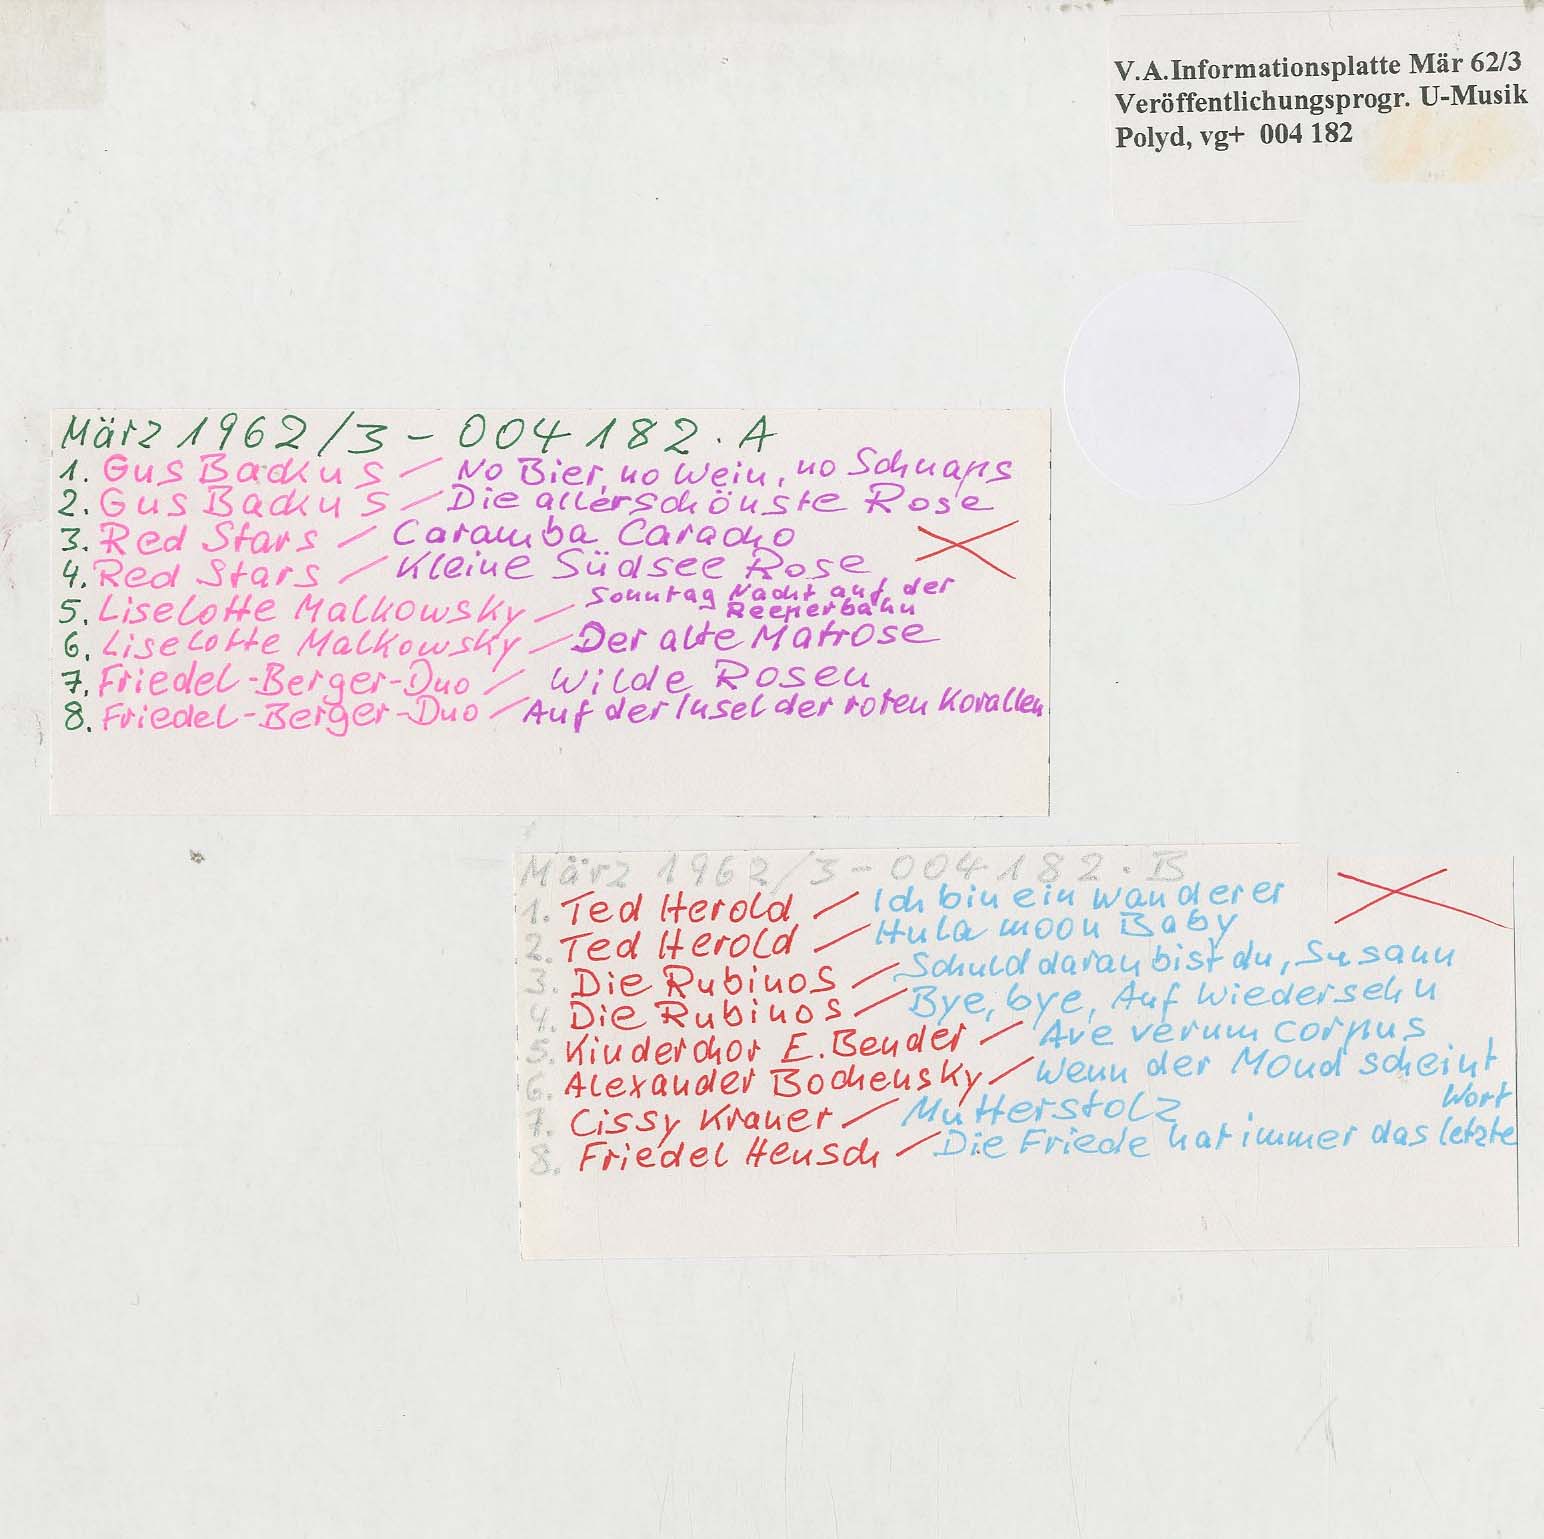 Albumcover Polydor Informationsplatte - 1962/3 März III (12.3.1962)